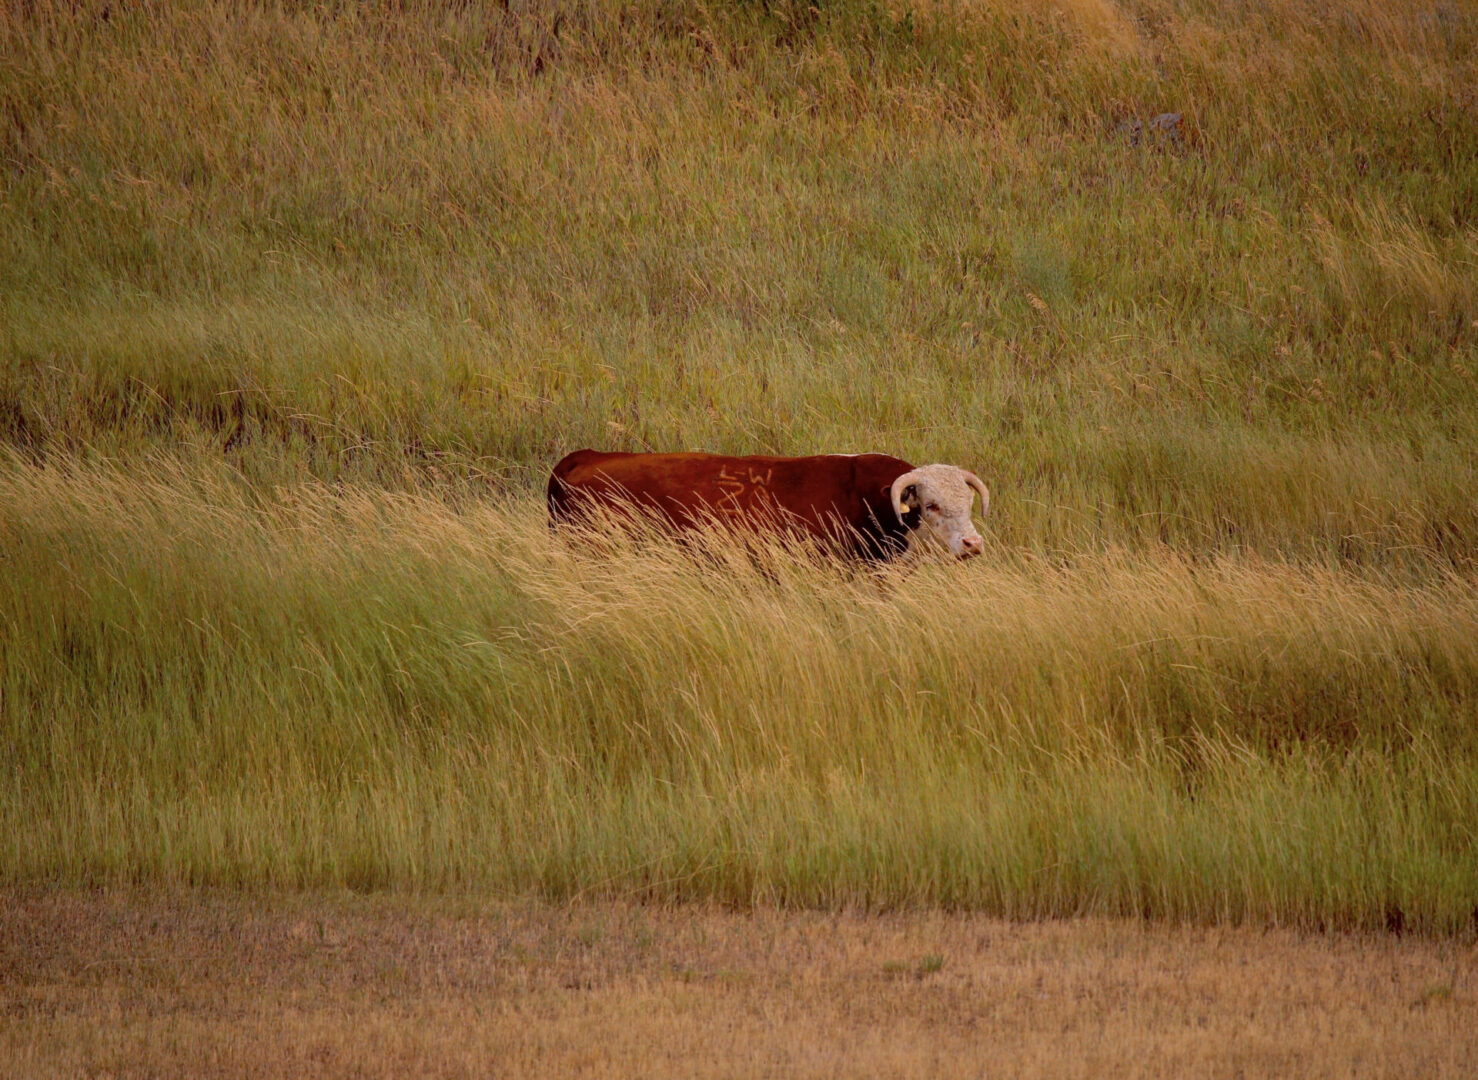 A long shot of herd bul in the grass fields